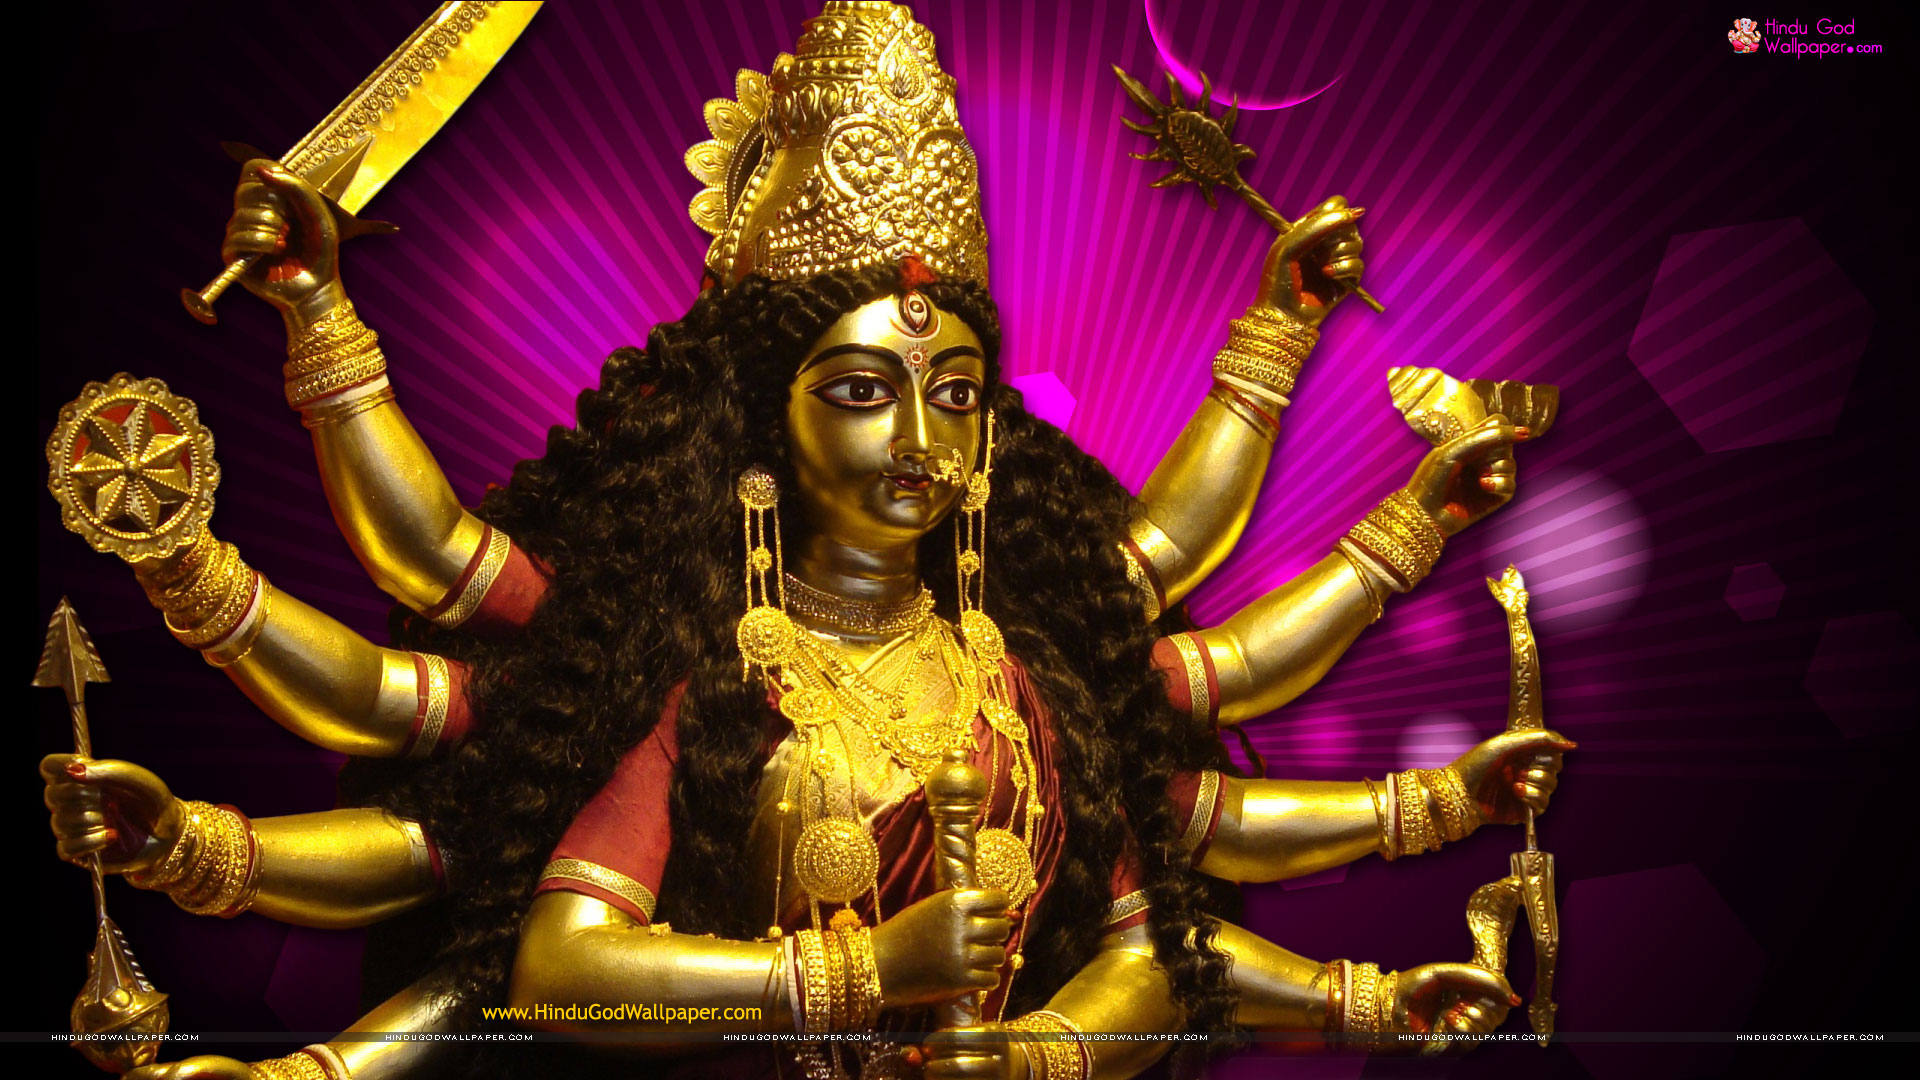 Goddess Durga Wallpapers High Quality Free Download